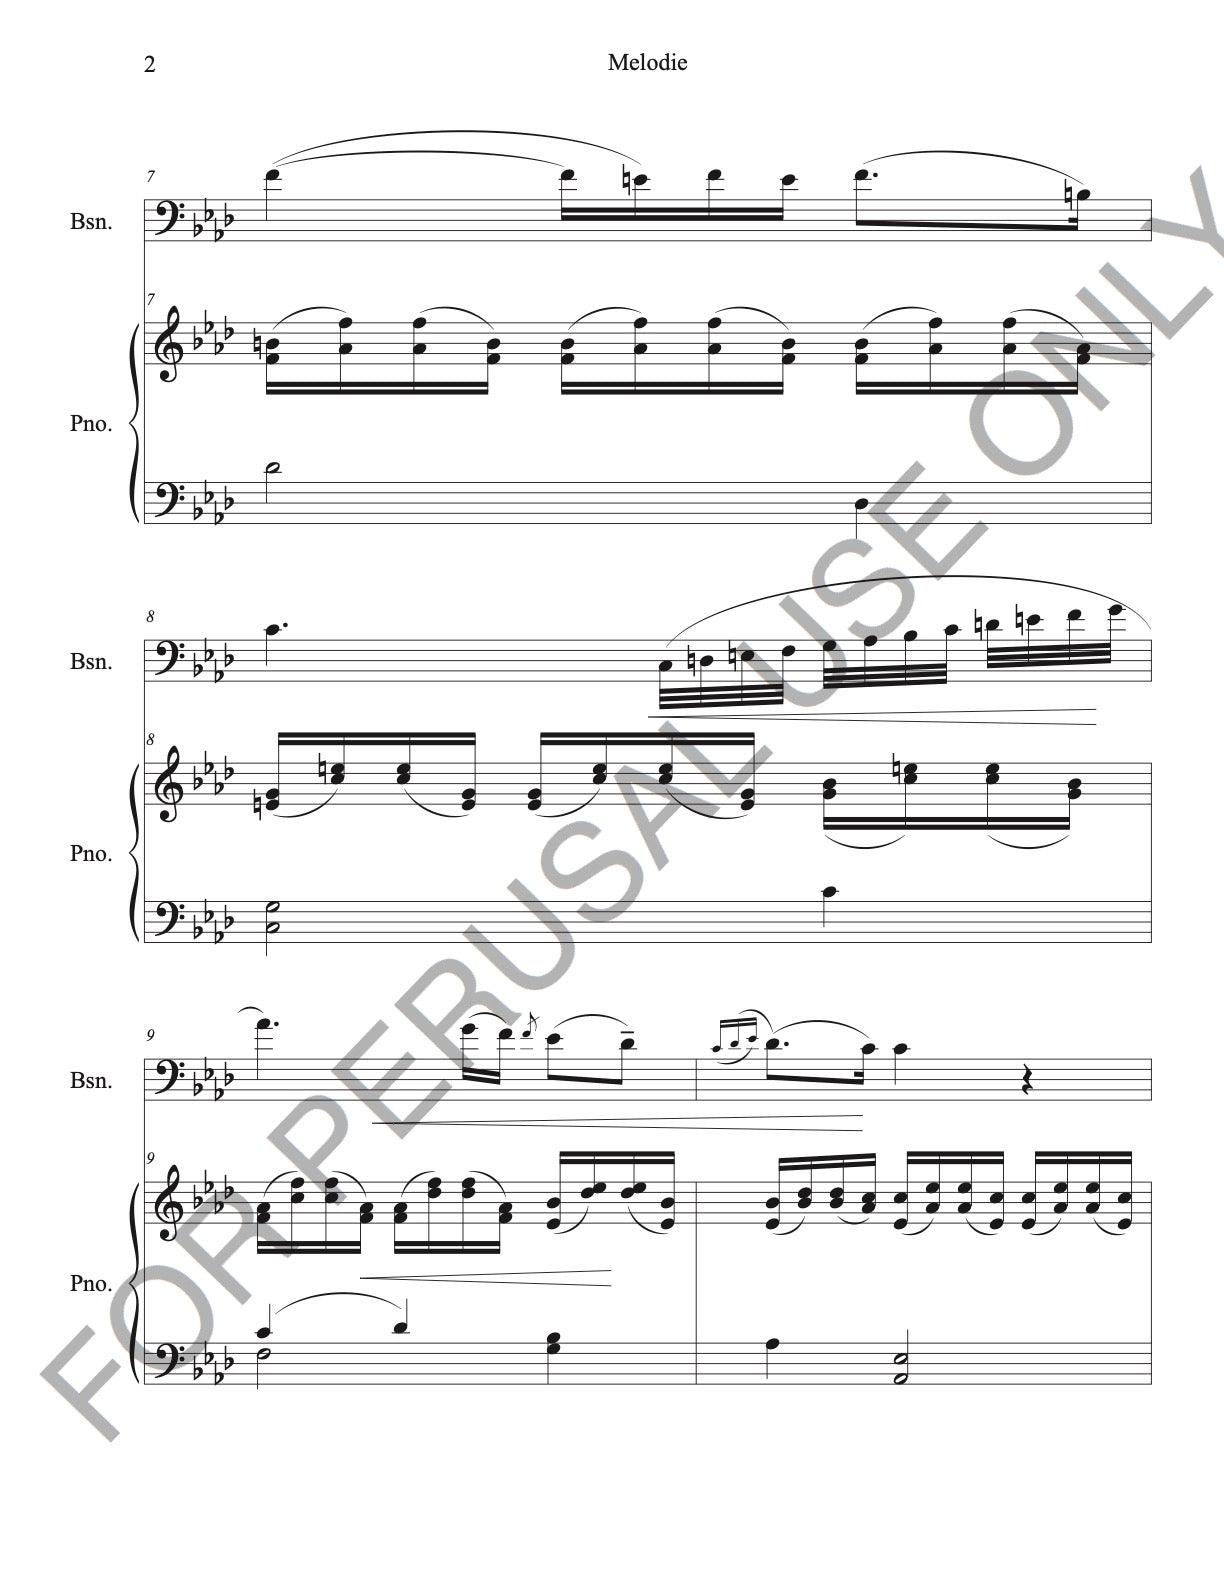 Bassoon and Piano sheet music: Gluck's Melodie - ChaipruckMekara